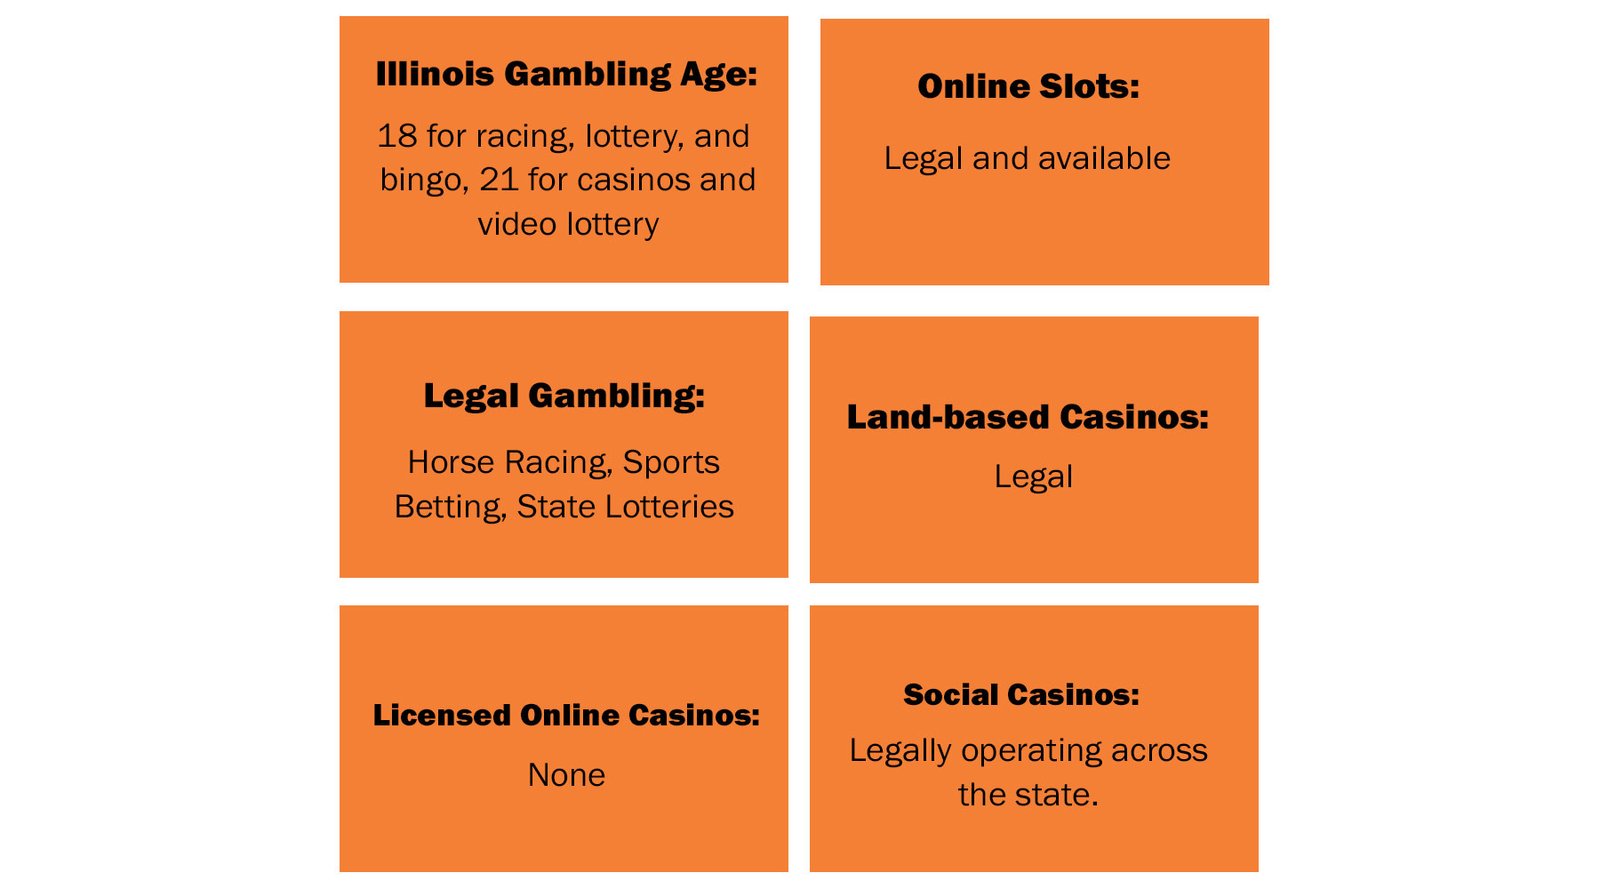 Illinois Casinos and Gambling at a Glance